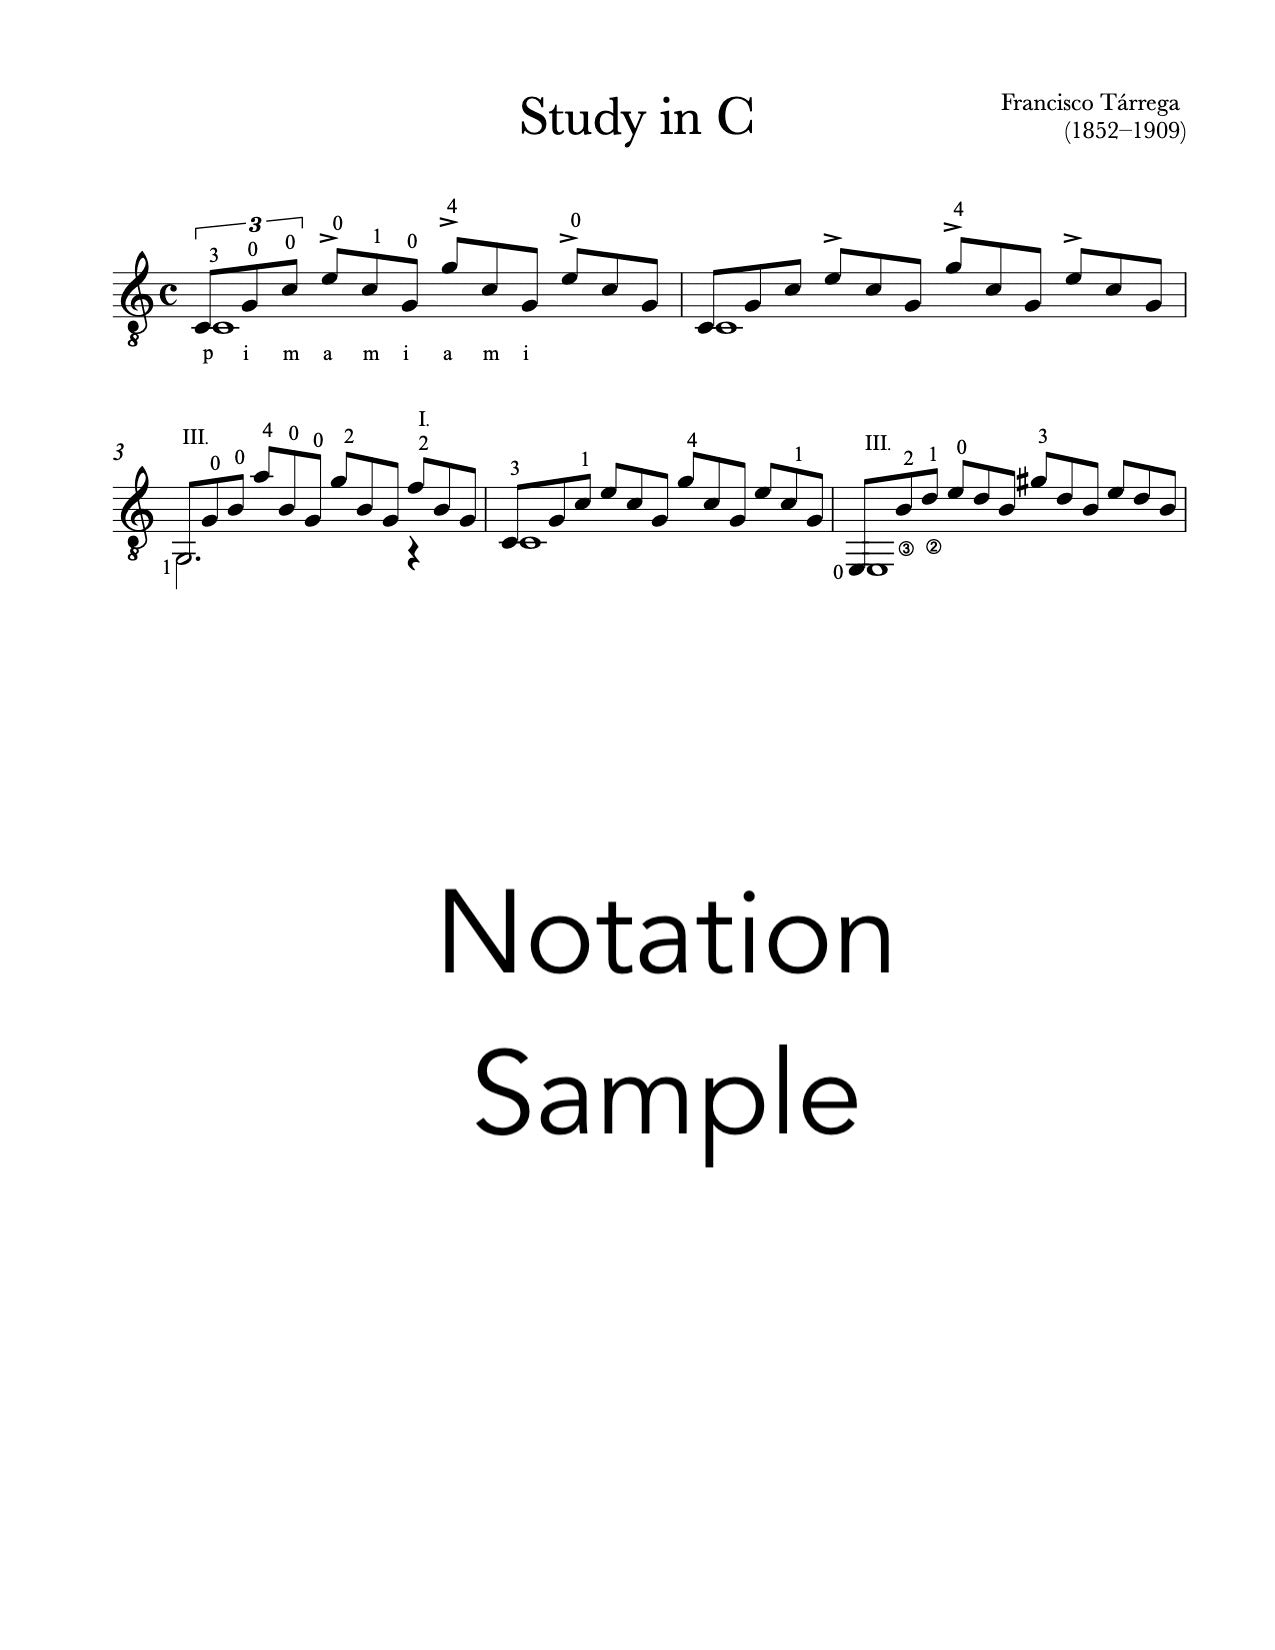 Study in C by Francisco Tárrega - Notation Sample